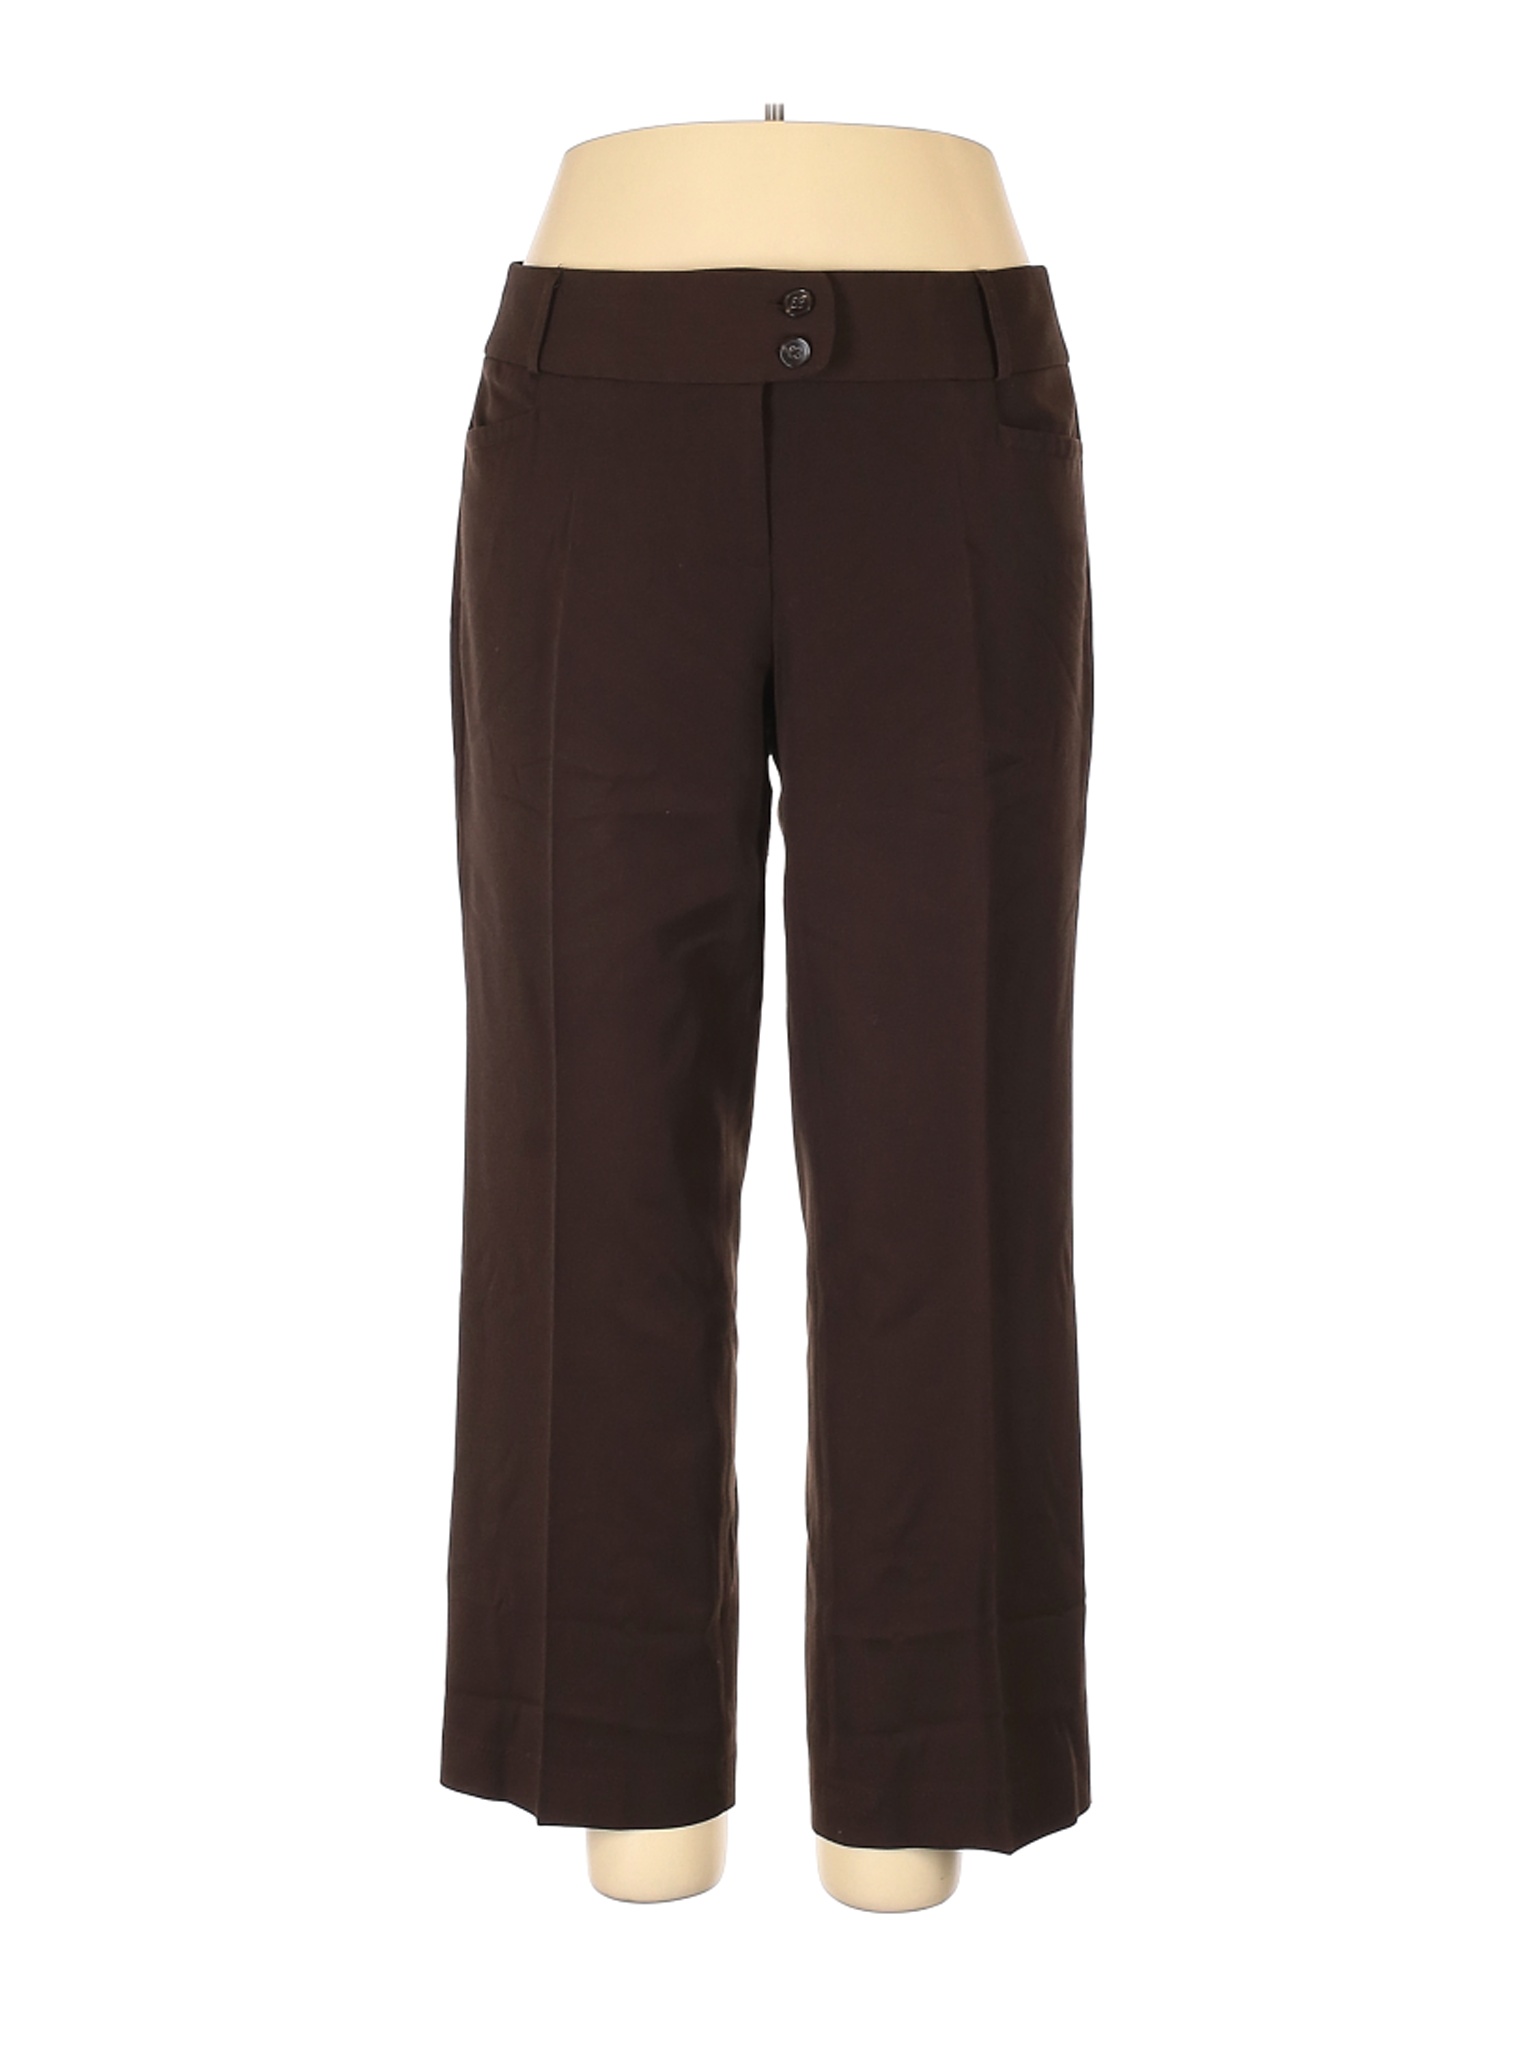 Rafaella Studio Women Brown Casual Pants 14 | eBay